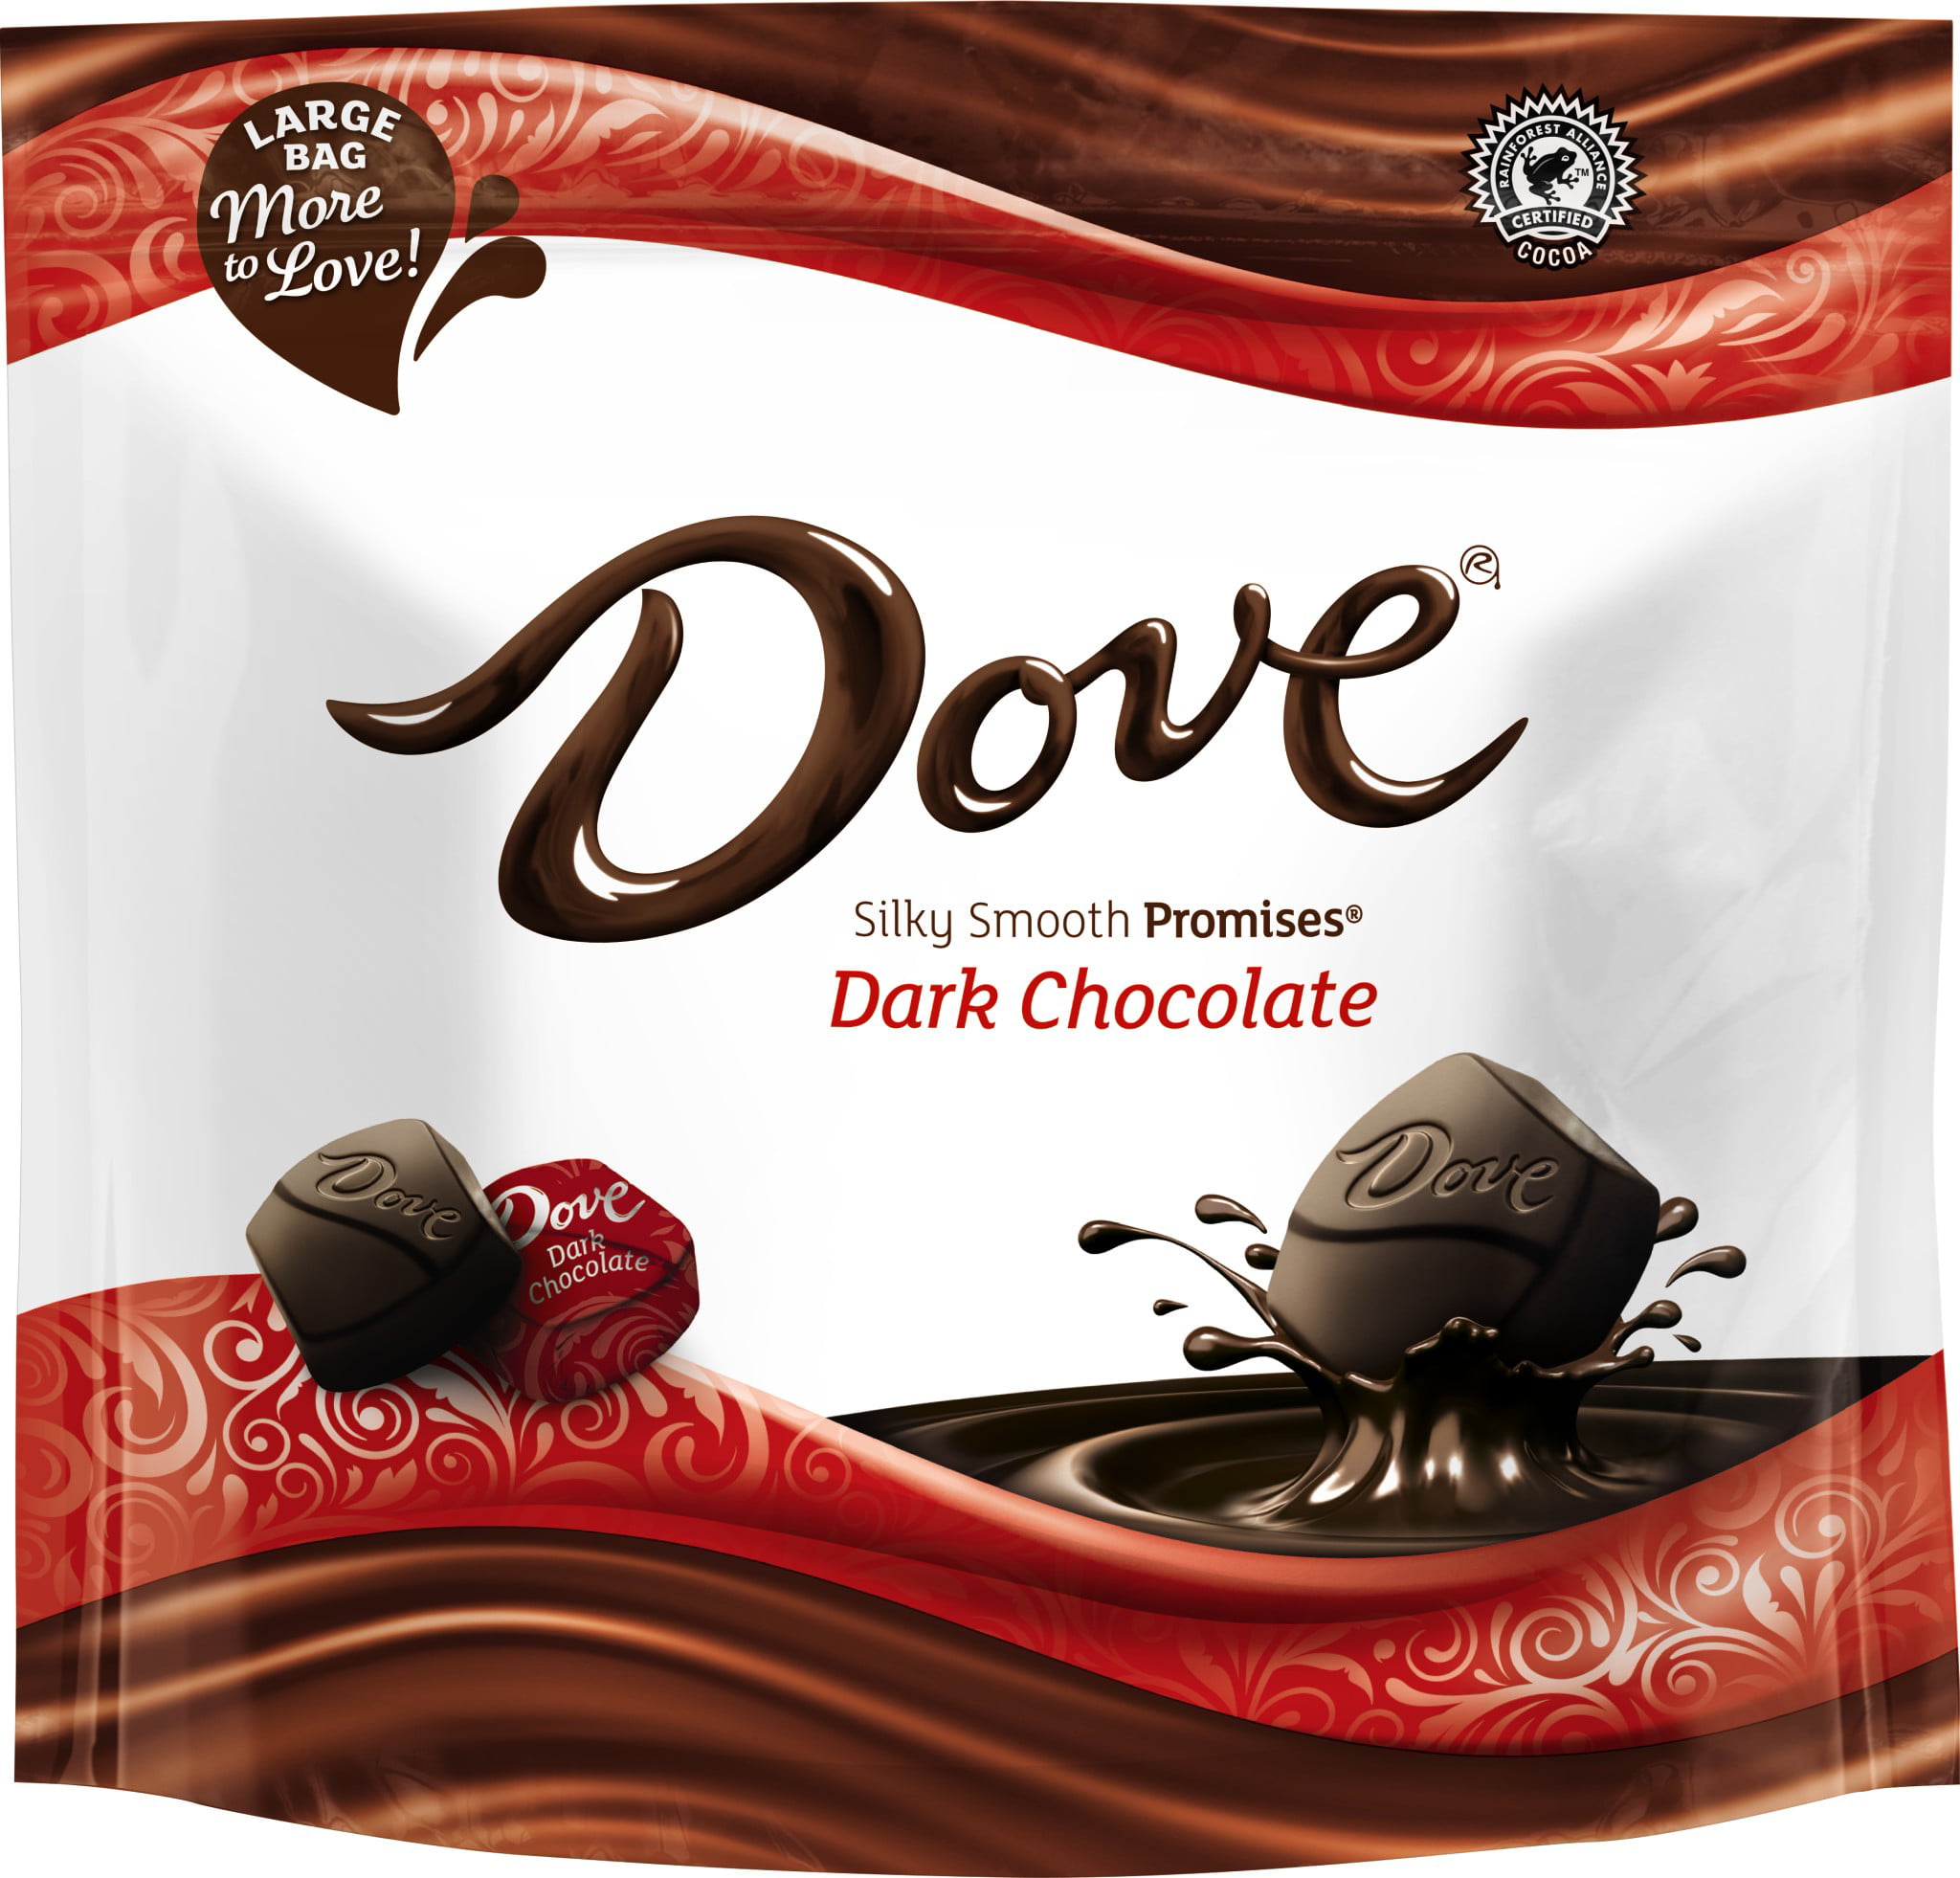 Dove Promises Dark Chocolate Candies - 15.8oz